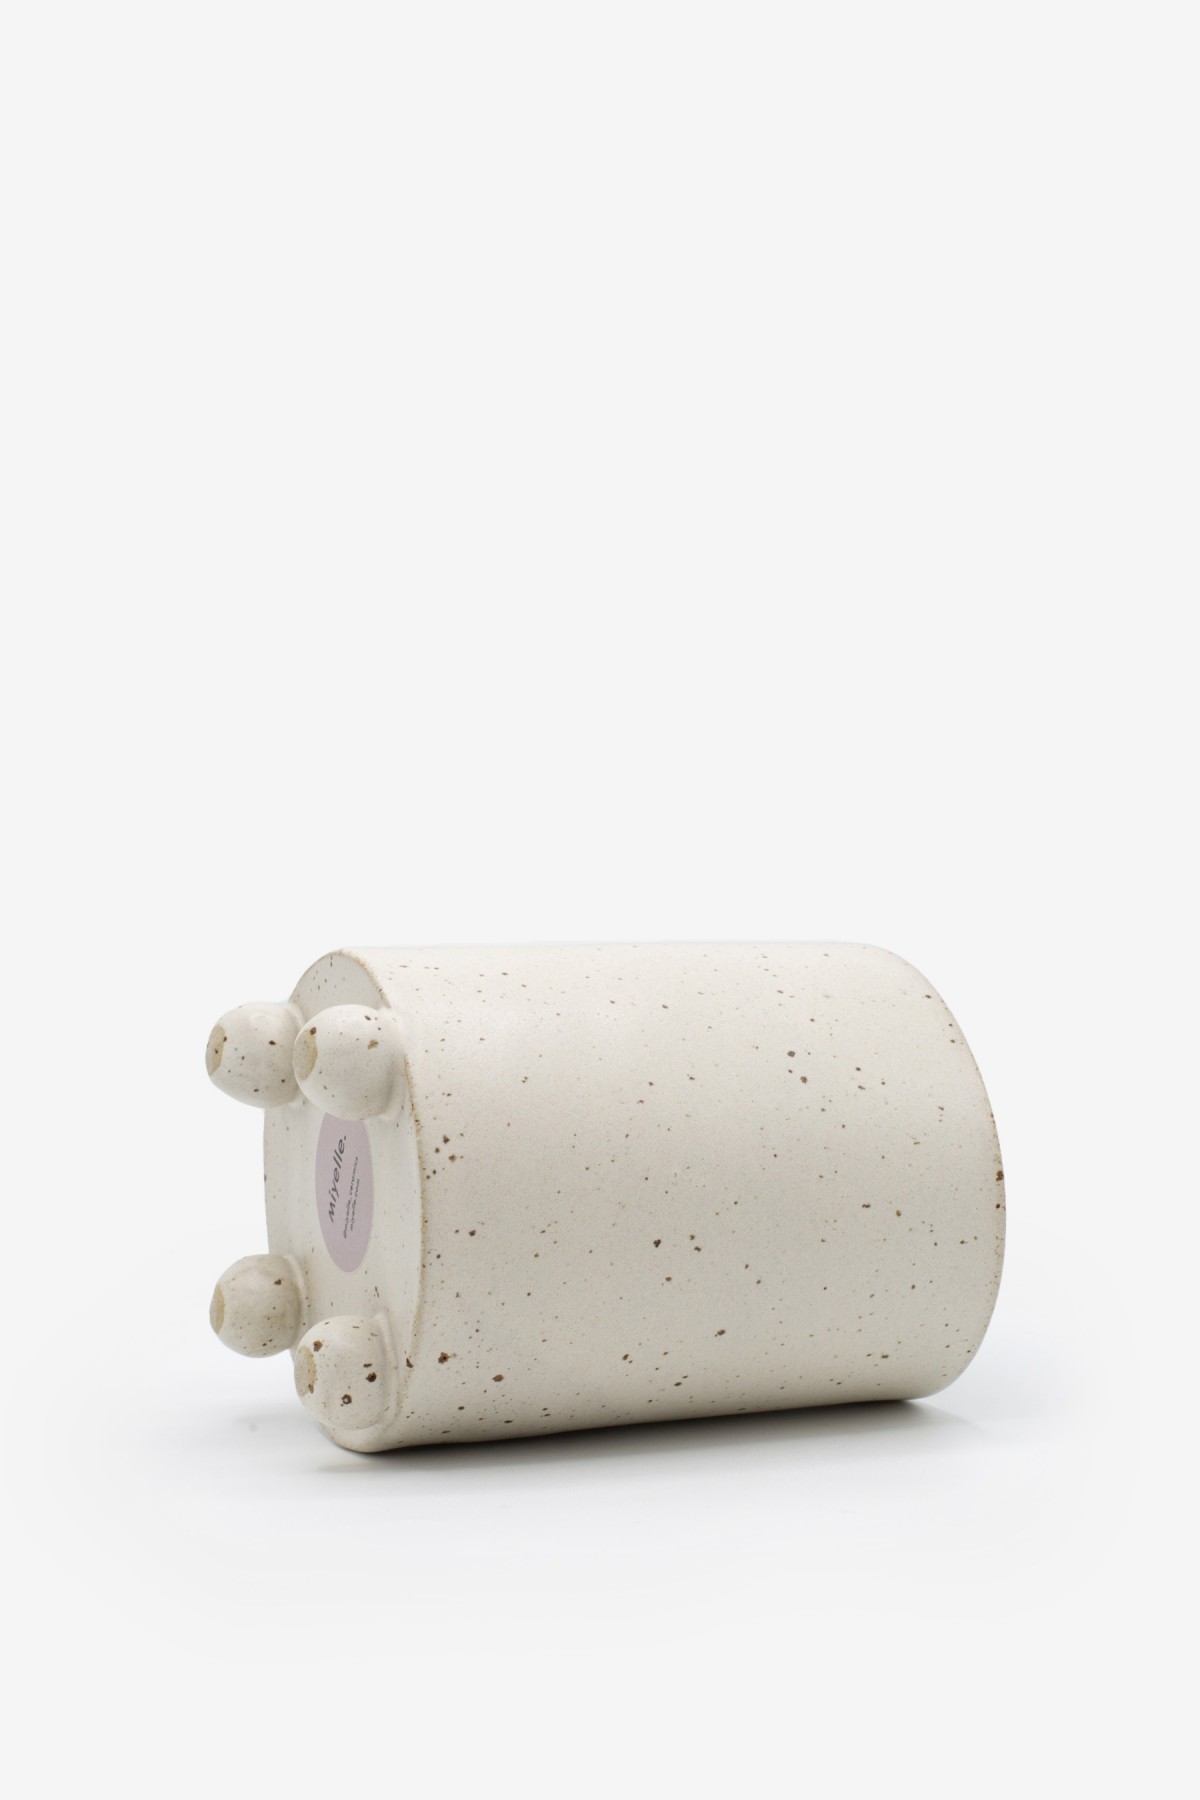 Miyelle Little Legs Pot in Speckled Cream